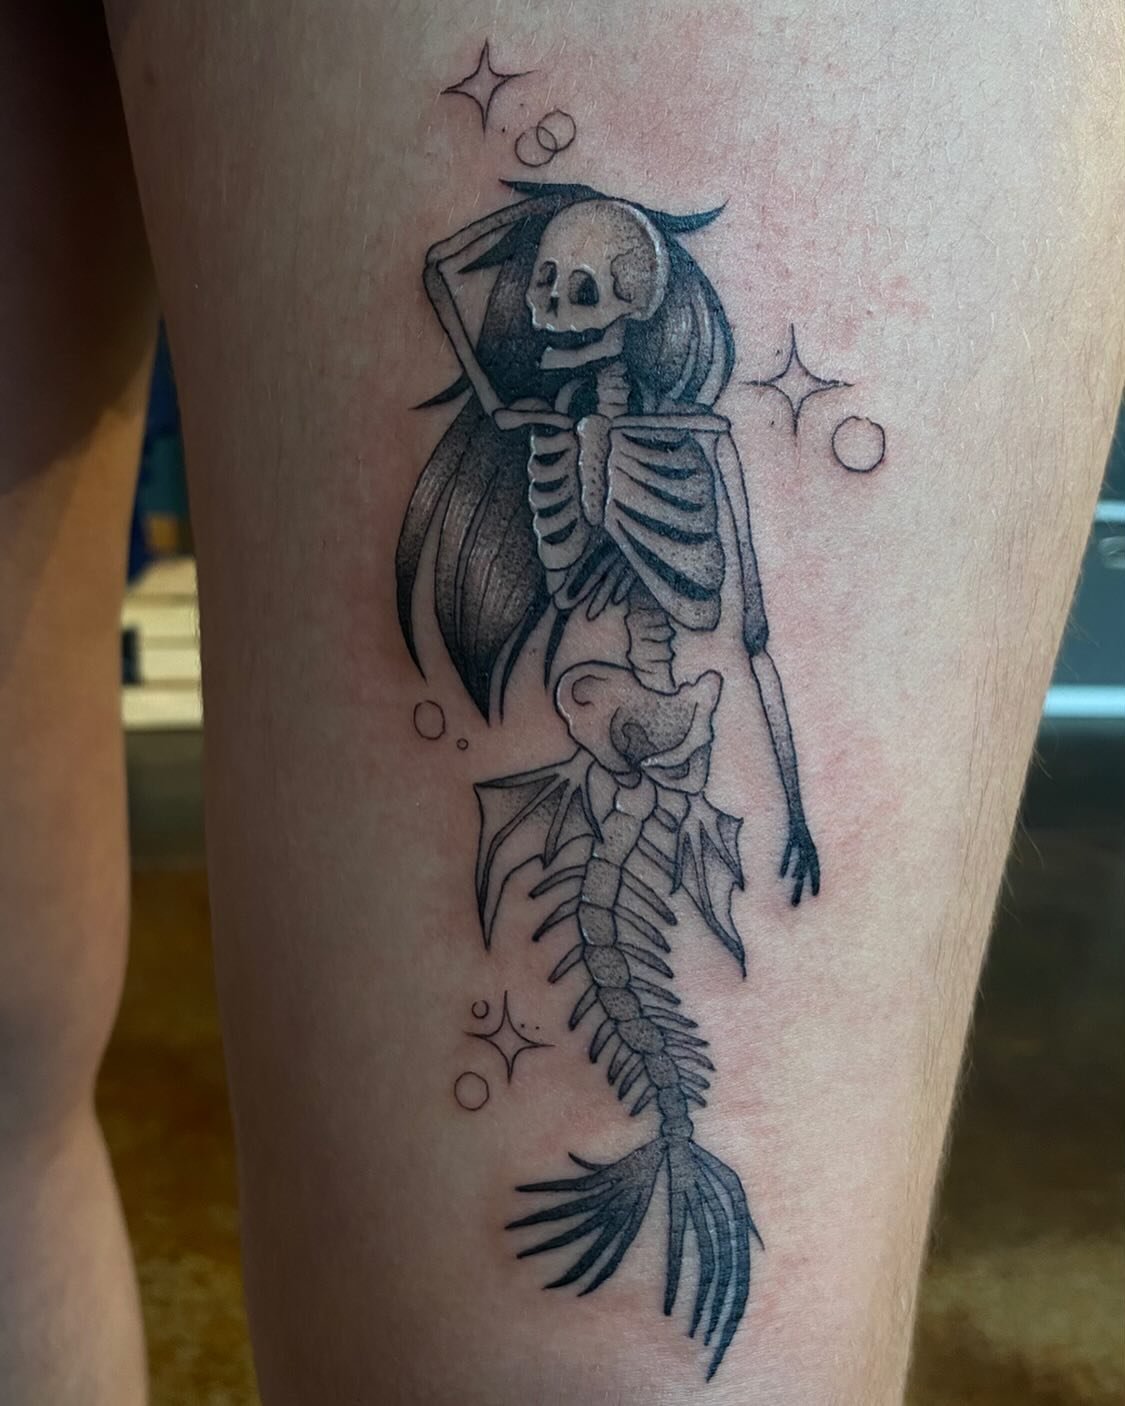 Cool skeleton mermaid I did about a week ago🖤🖤🖤 

#skeletontattoo #skeletonmermaid #blackandgreytattoo #stl #tattoo #mermaid #stltattooartist #alchemytattoocollective #cheyennetattooequipment